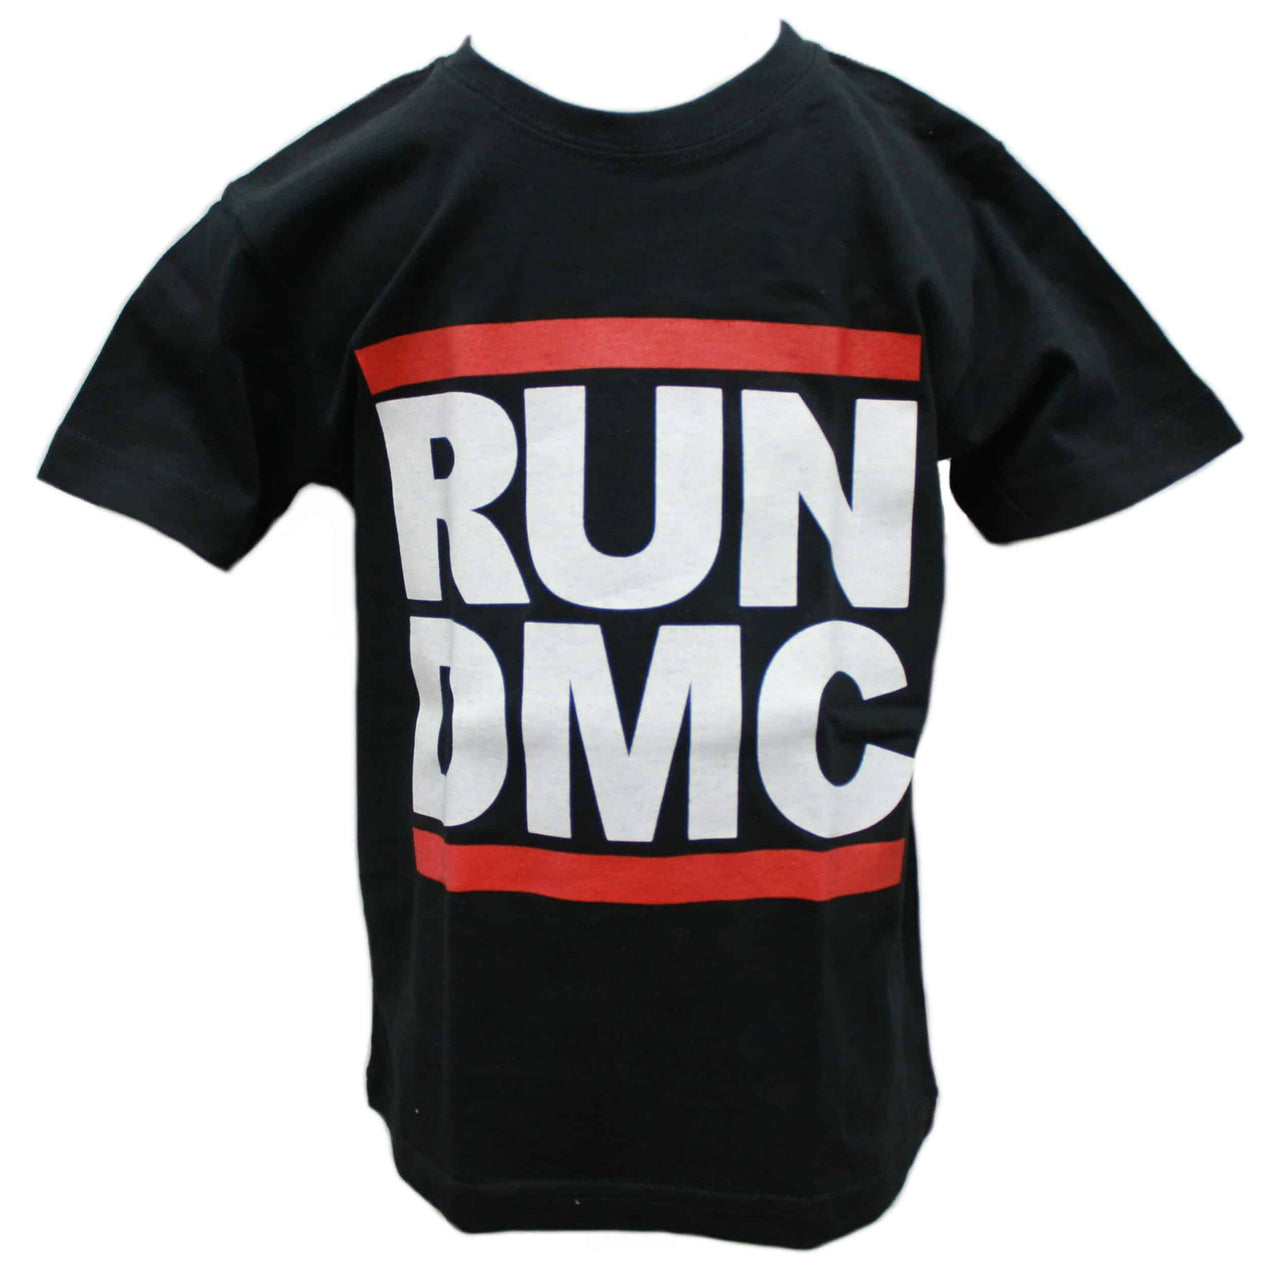 Run DMC Kids Black T-Shirt